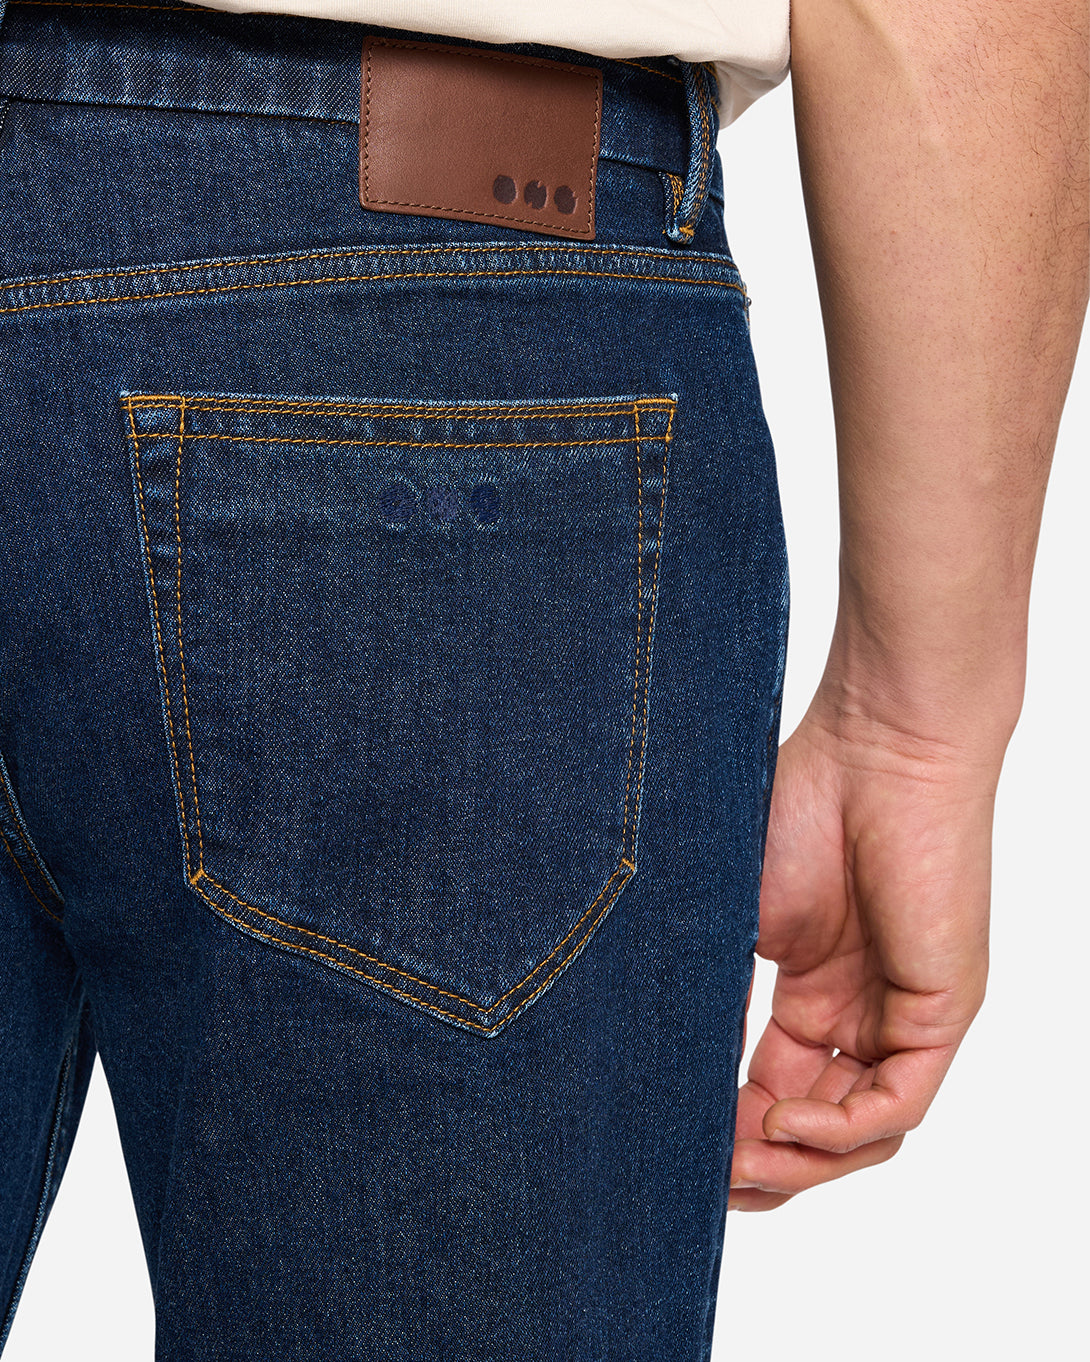 DK INDIGO Houstons Denim Twill Jeans Mens Tapered Stretch Pant